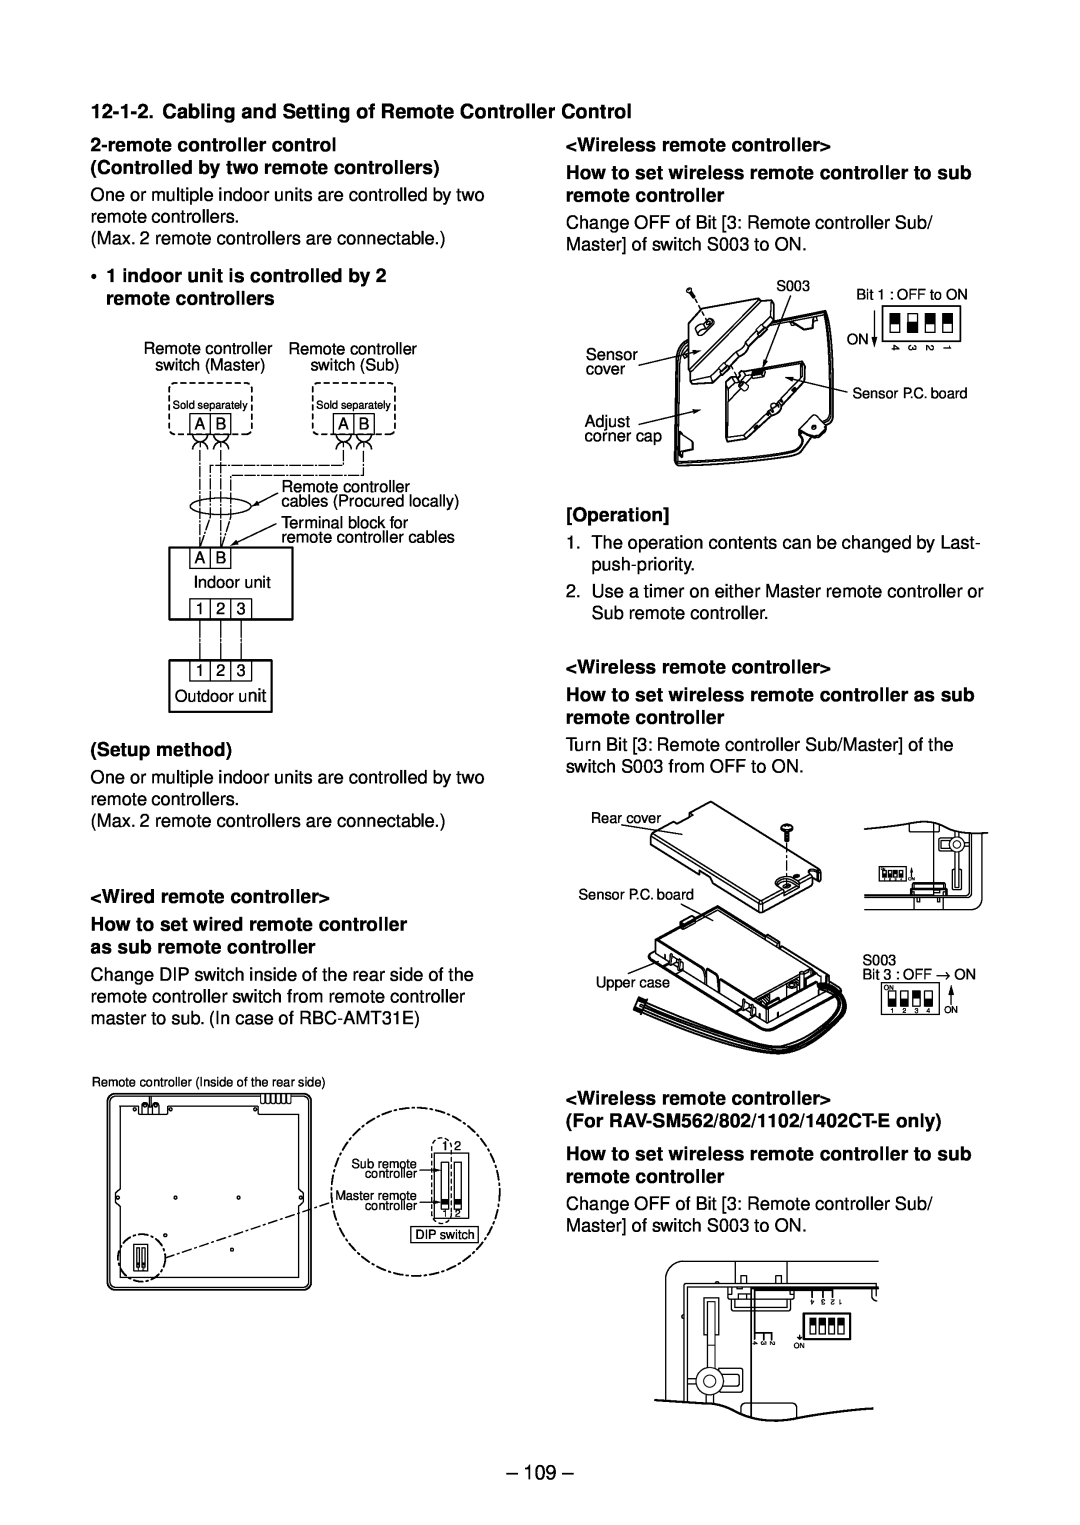 Toshiba RAV-SM1402UT-E, RAV-SM1102UT-E, RAV-SM802UT-E, RAV-SM562UT-E service manual 109 